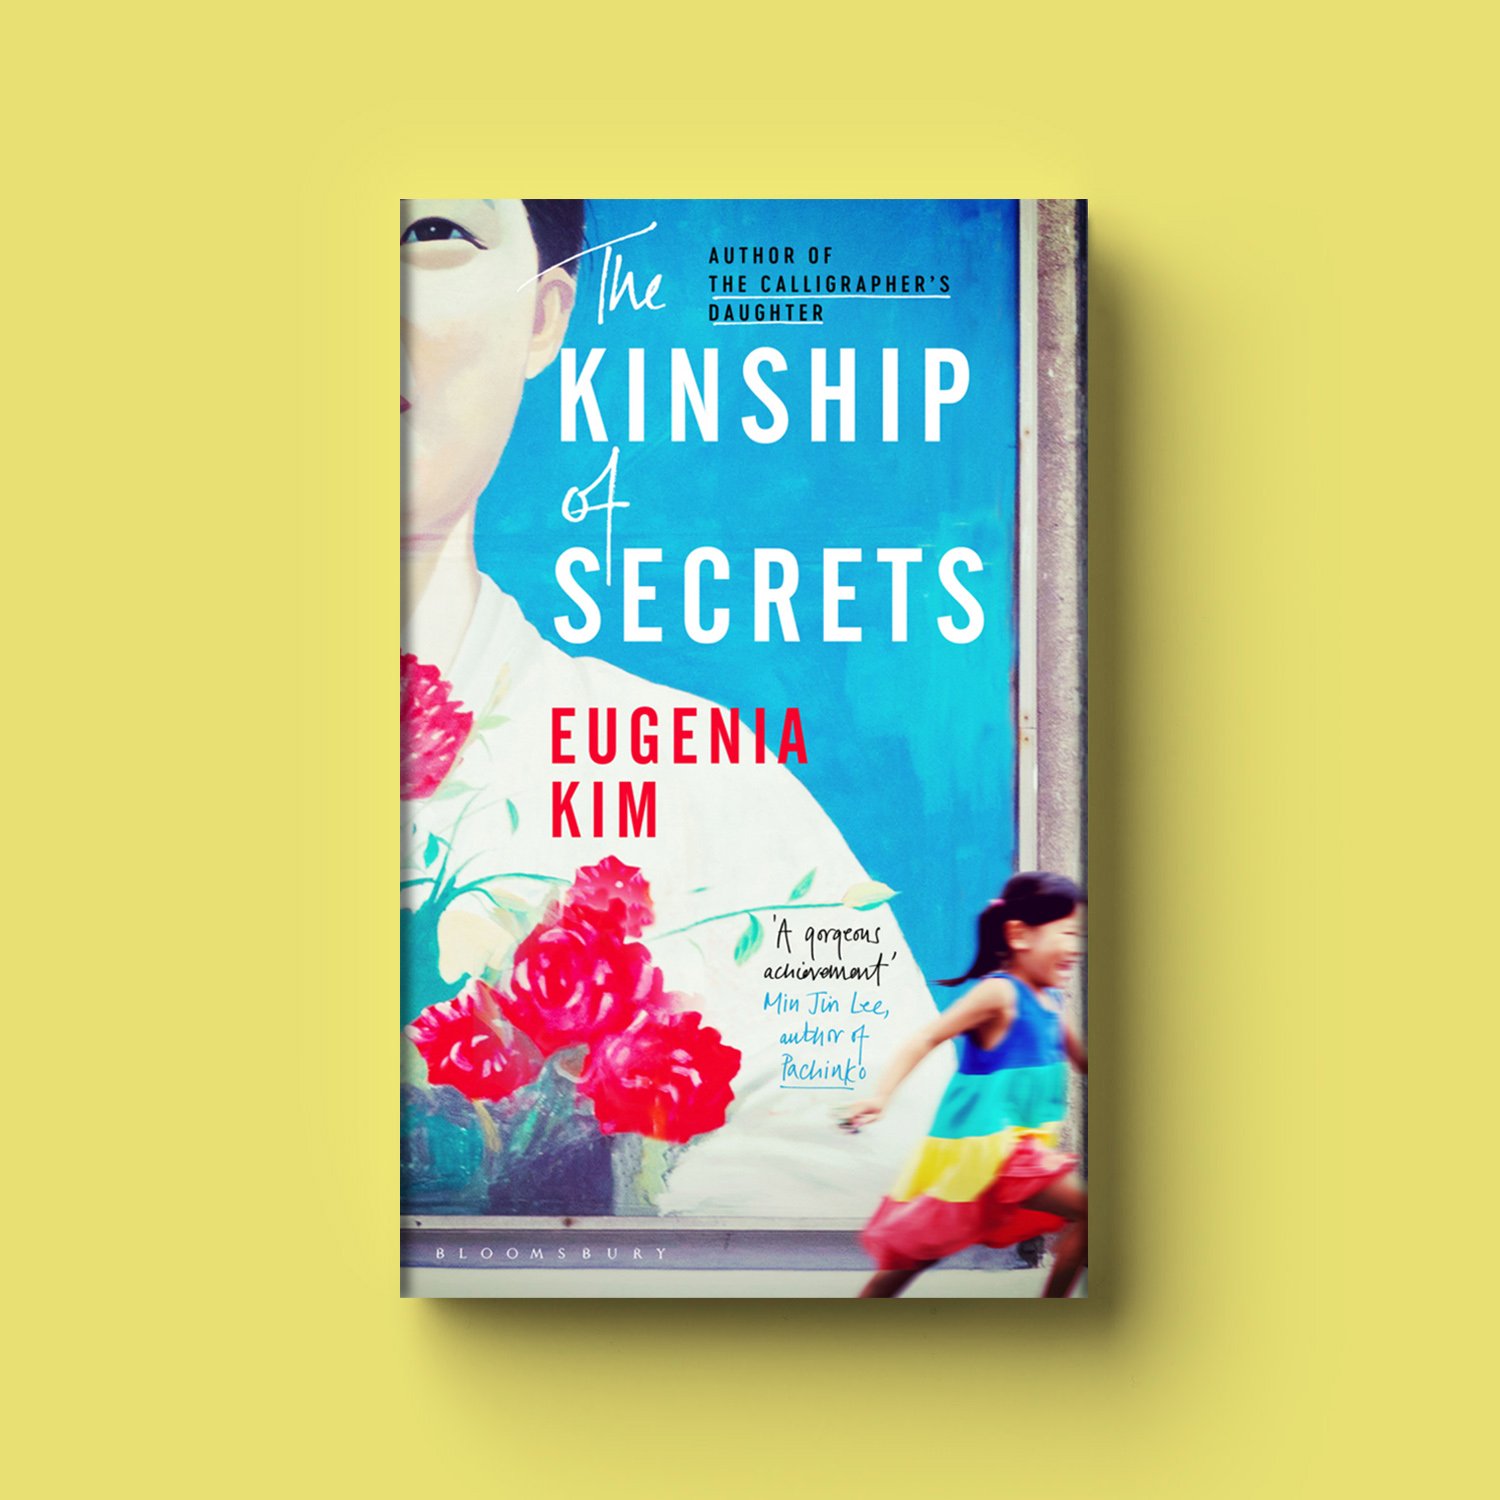 The Kinship of Secrets — Emma Ewbank Book Cover Design